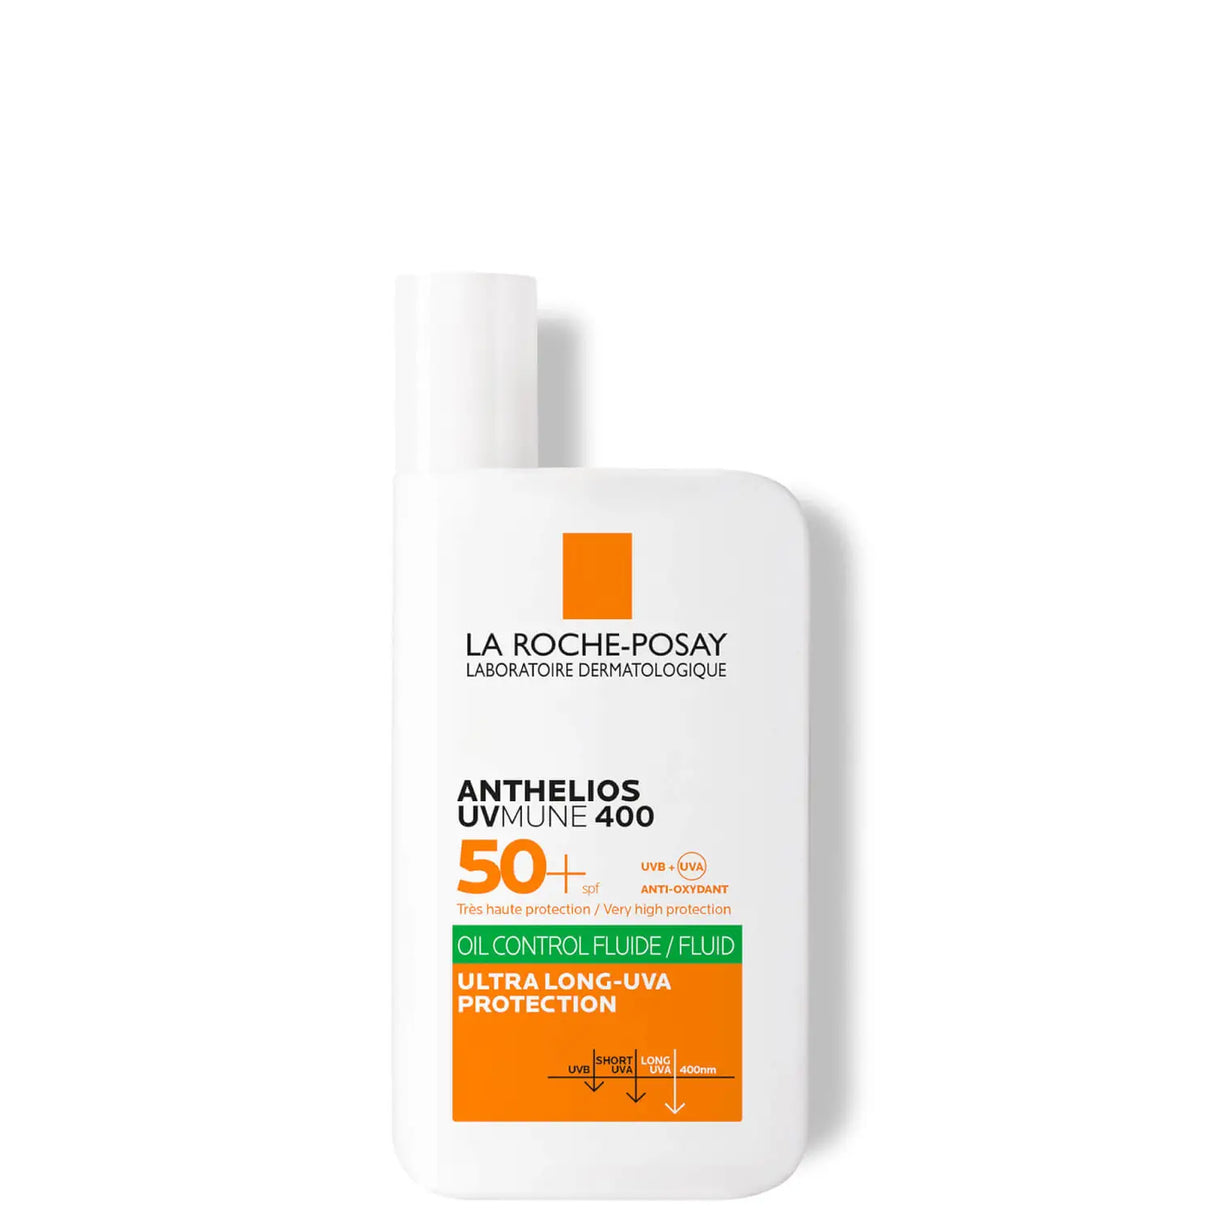 La Roche-Posay Anthelios Oil Control Fluid SPF50+ for Oily Blemish-Prone Skin LRPW (50ml)